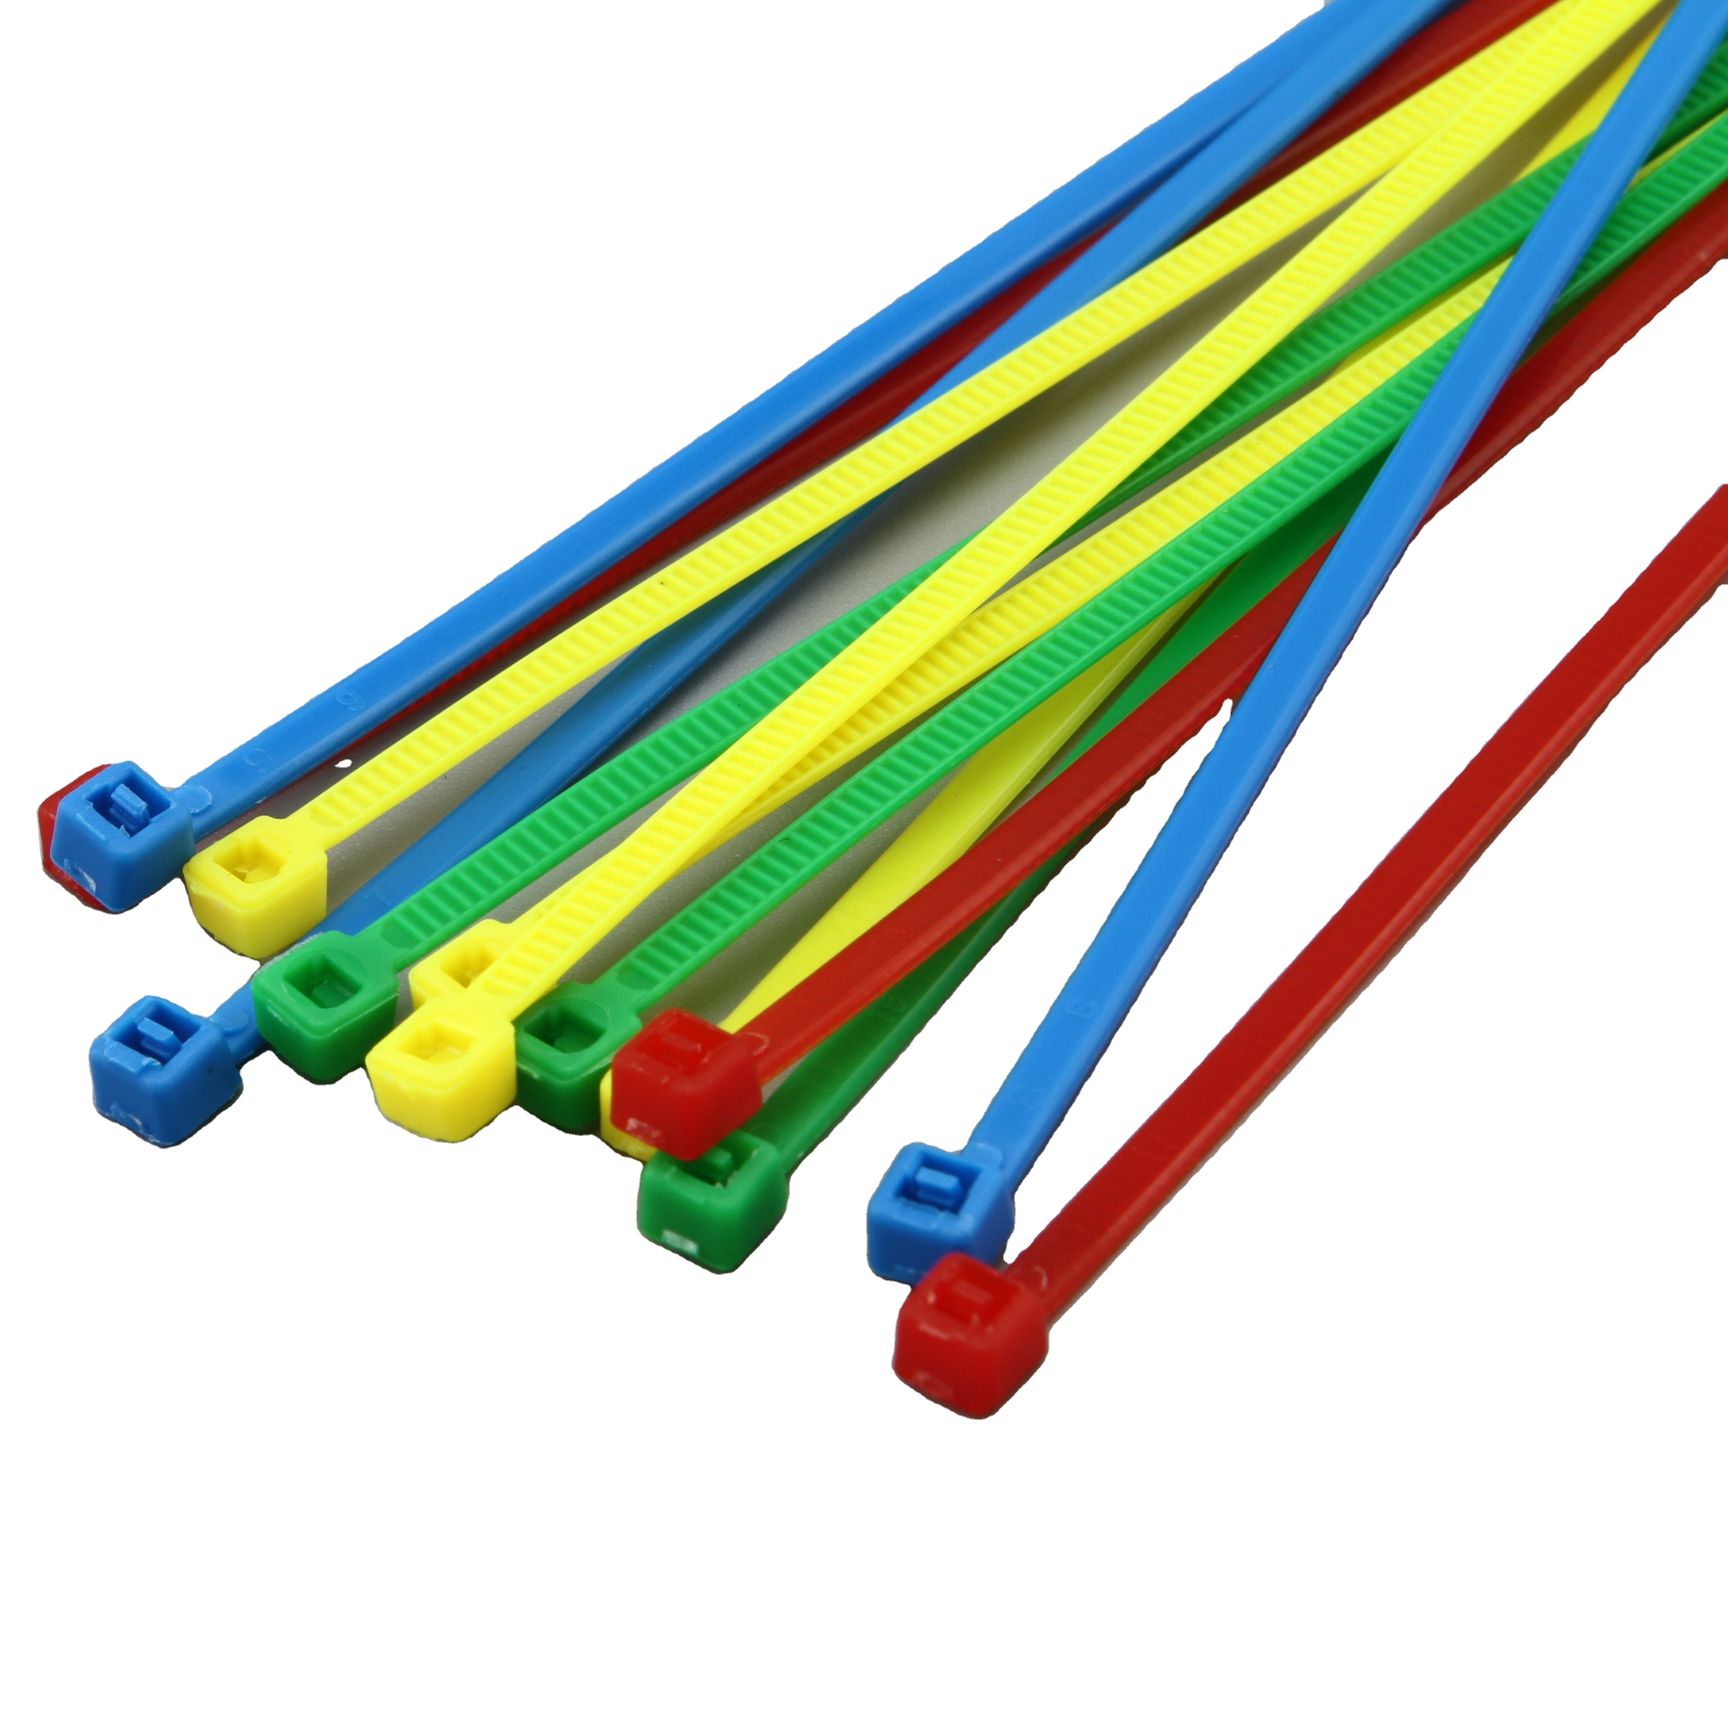 Adjustable nylon cable ties - 4